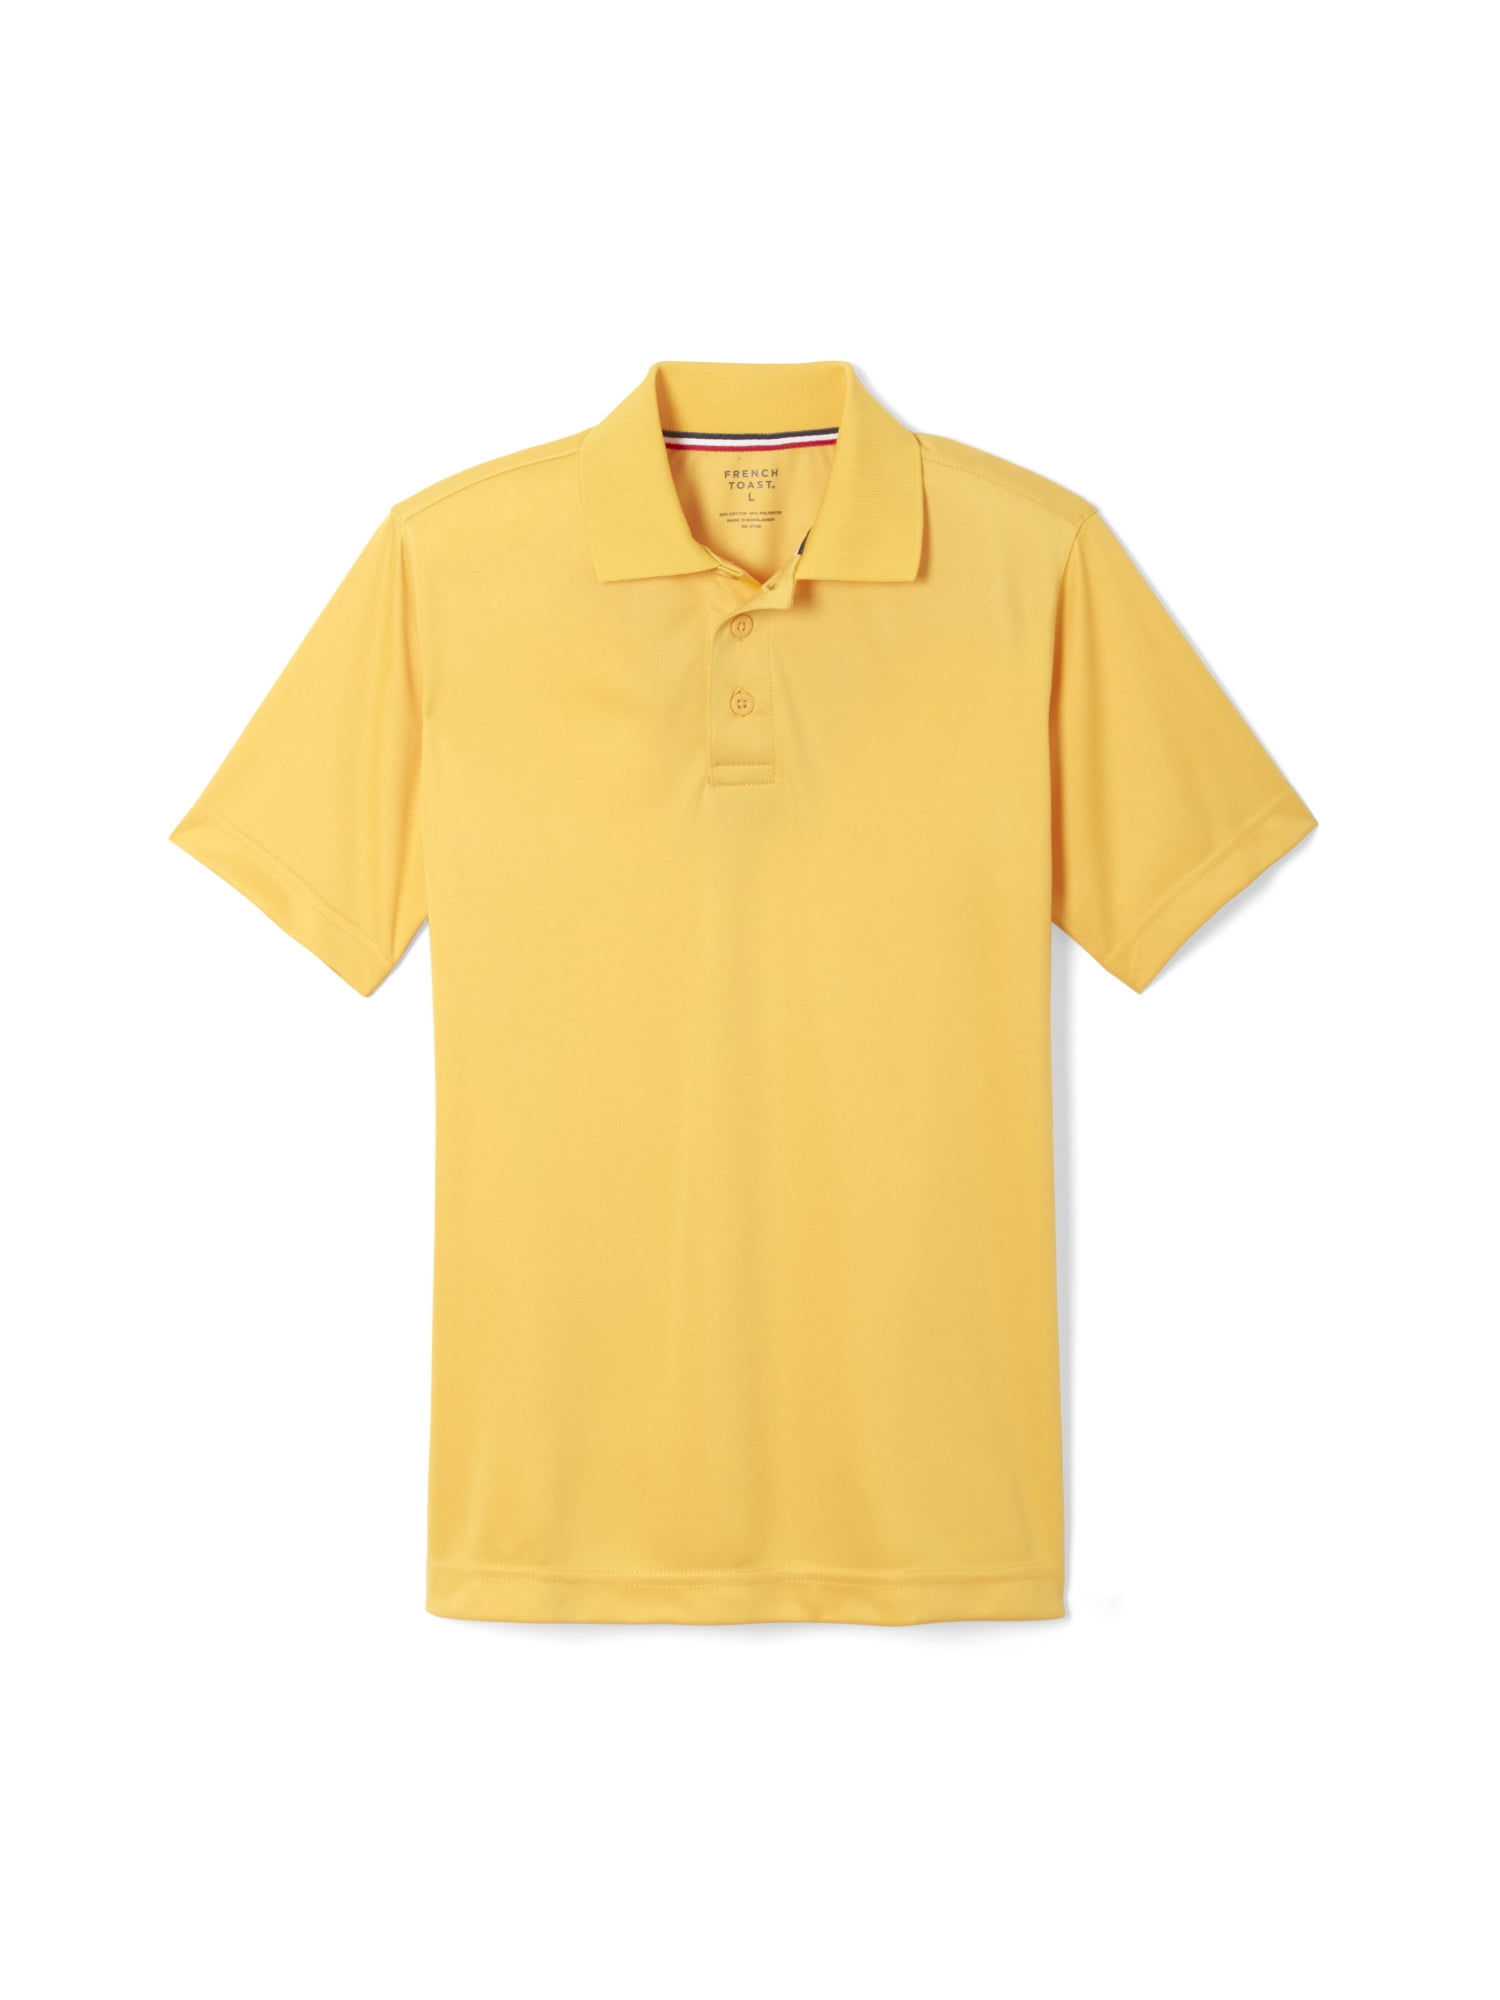 Linen Galaxy School Uniform Yellow Polo T Shirts Plain Kids T Shirt Boys Girls Tee Top Sports 